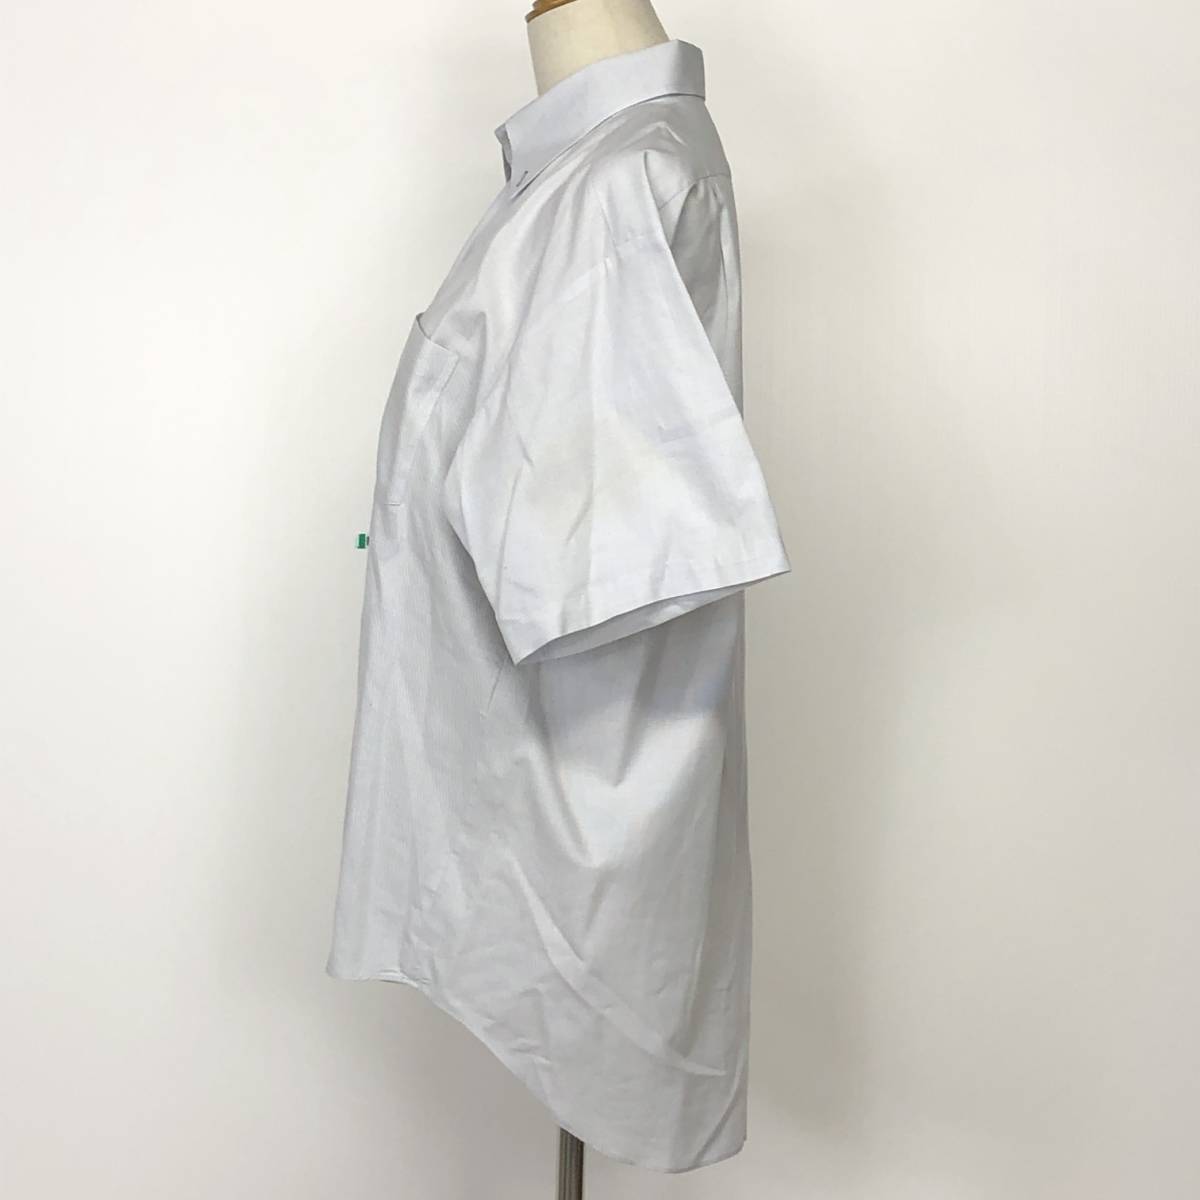 X333 VILLAND しまむら メンズ トップス ワイシャツ 半袖 クリーニングタグ付き XL ホワイト 白 綿素材含 オフィススタイリッシュルック_画像2